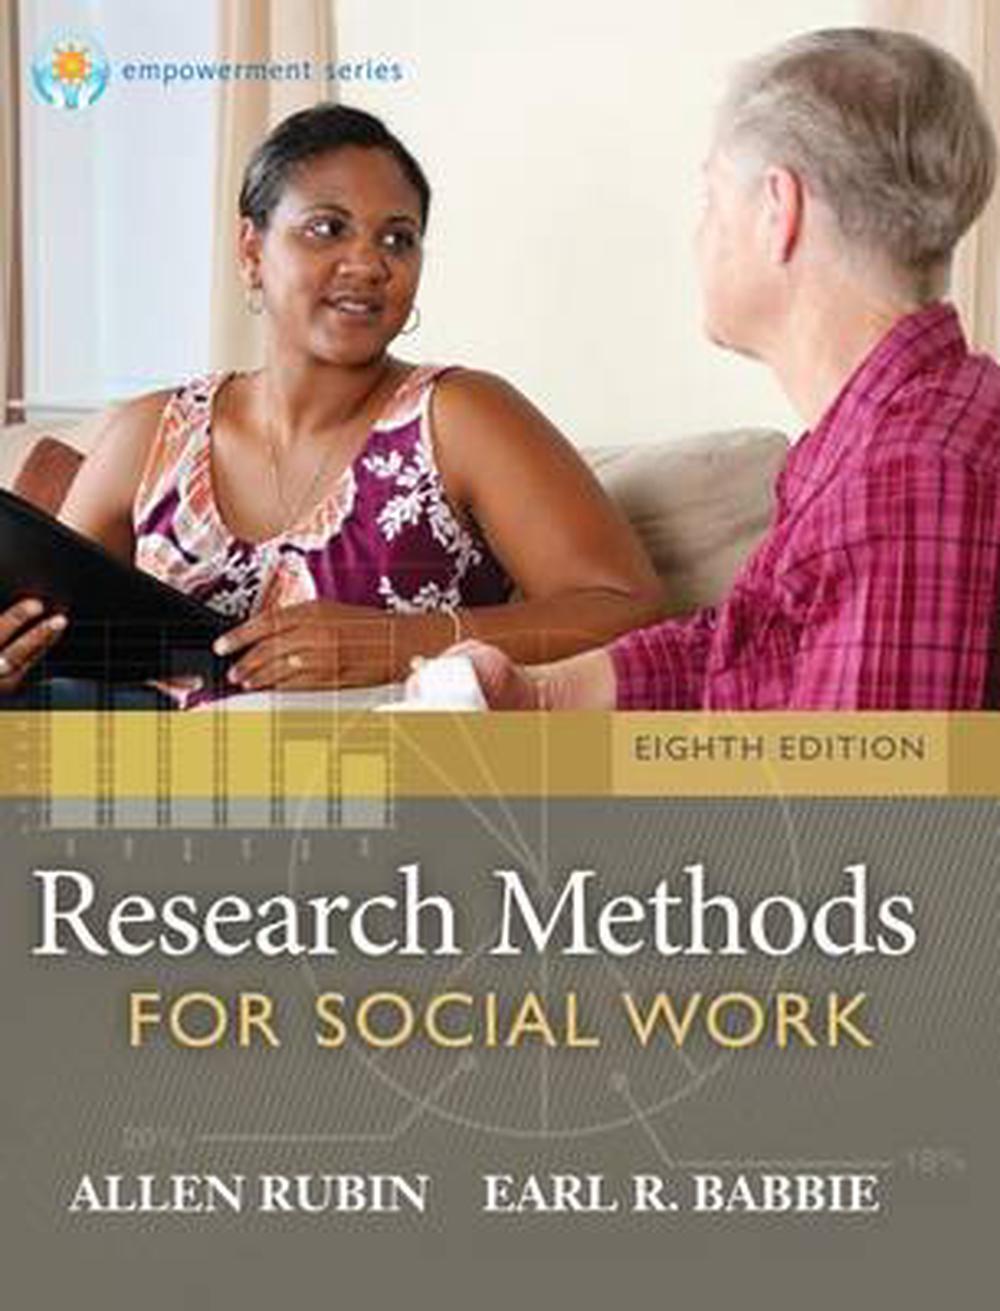 benefits of research methods in social work